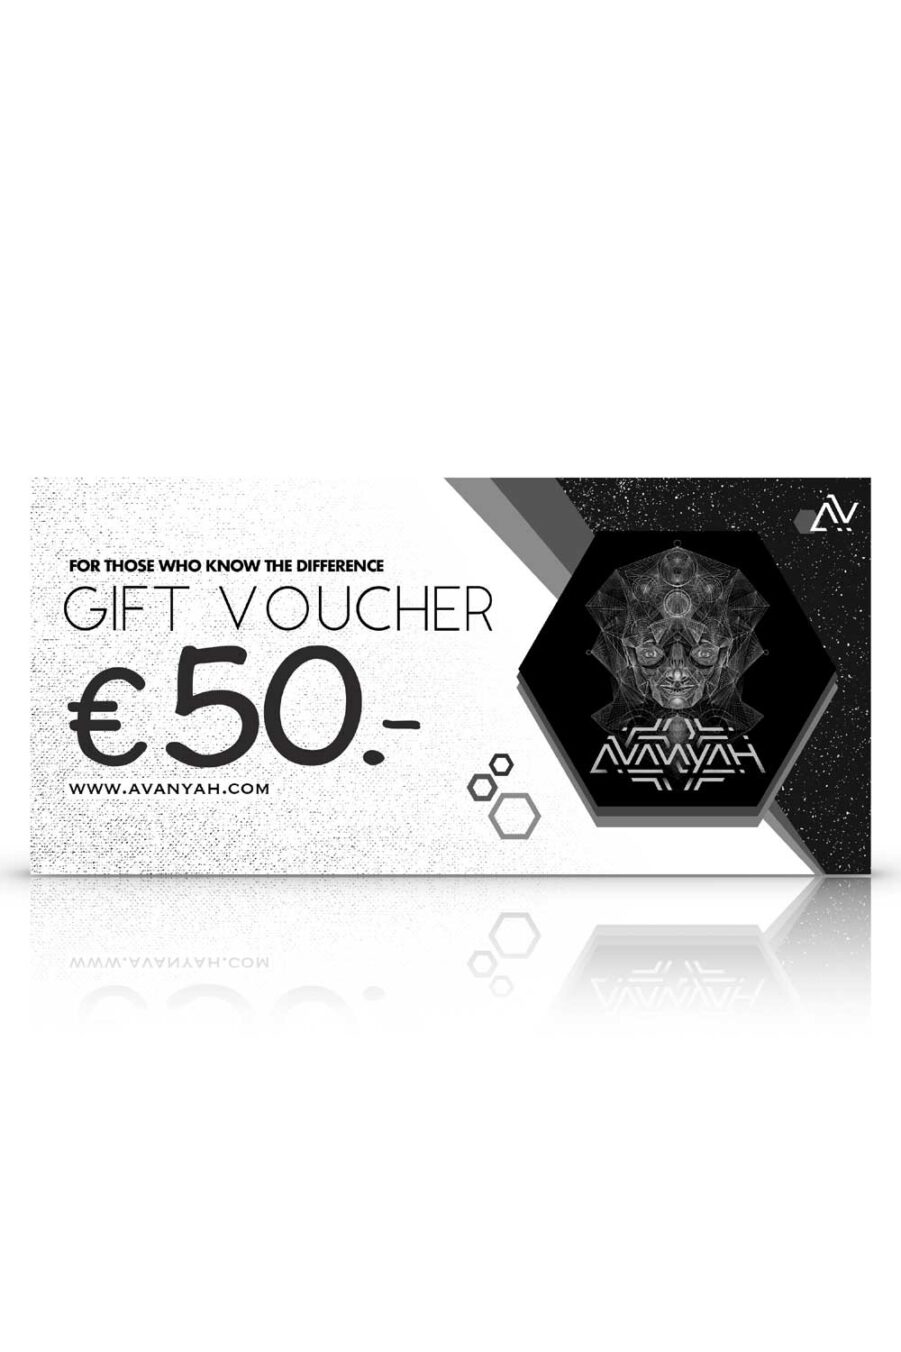 50 € Gift card in Avanyah's online fashion store